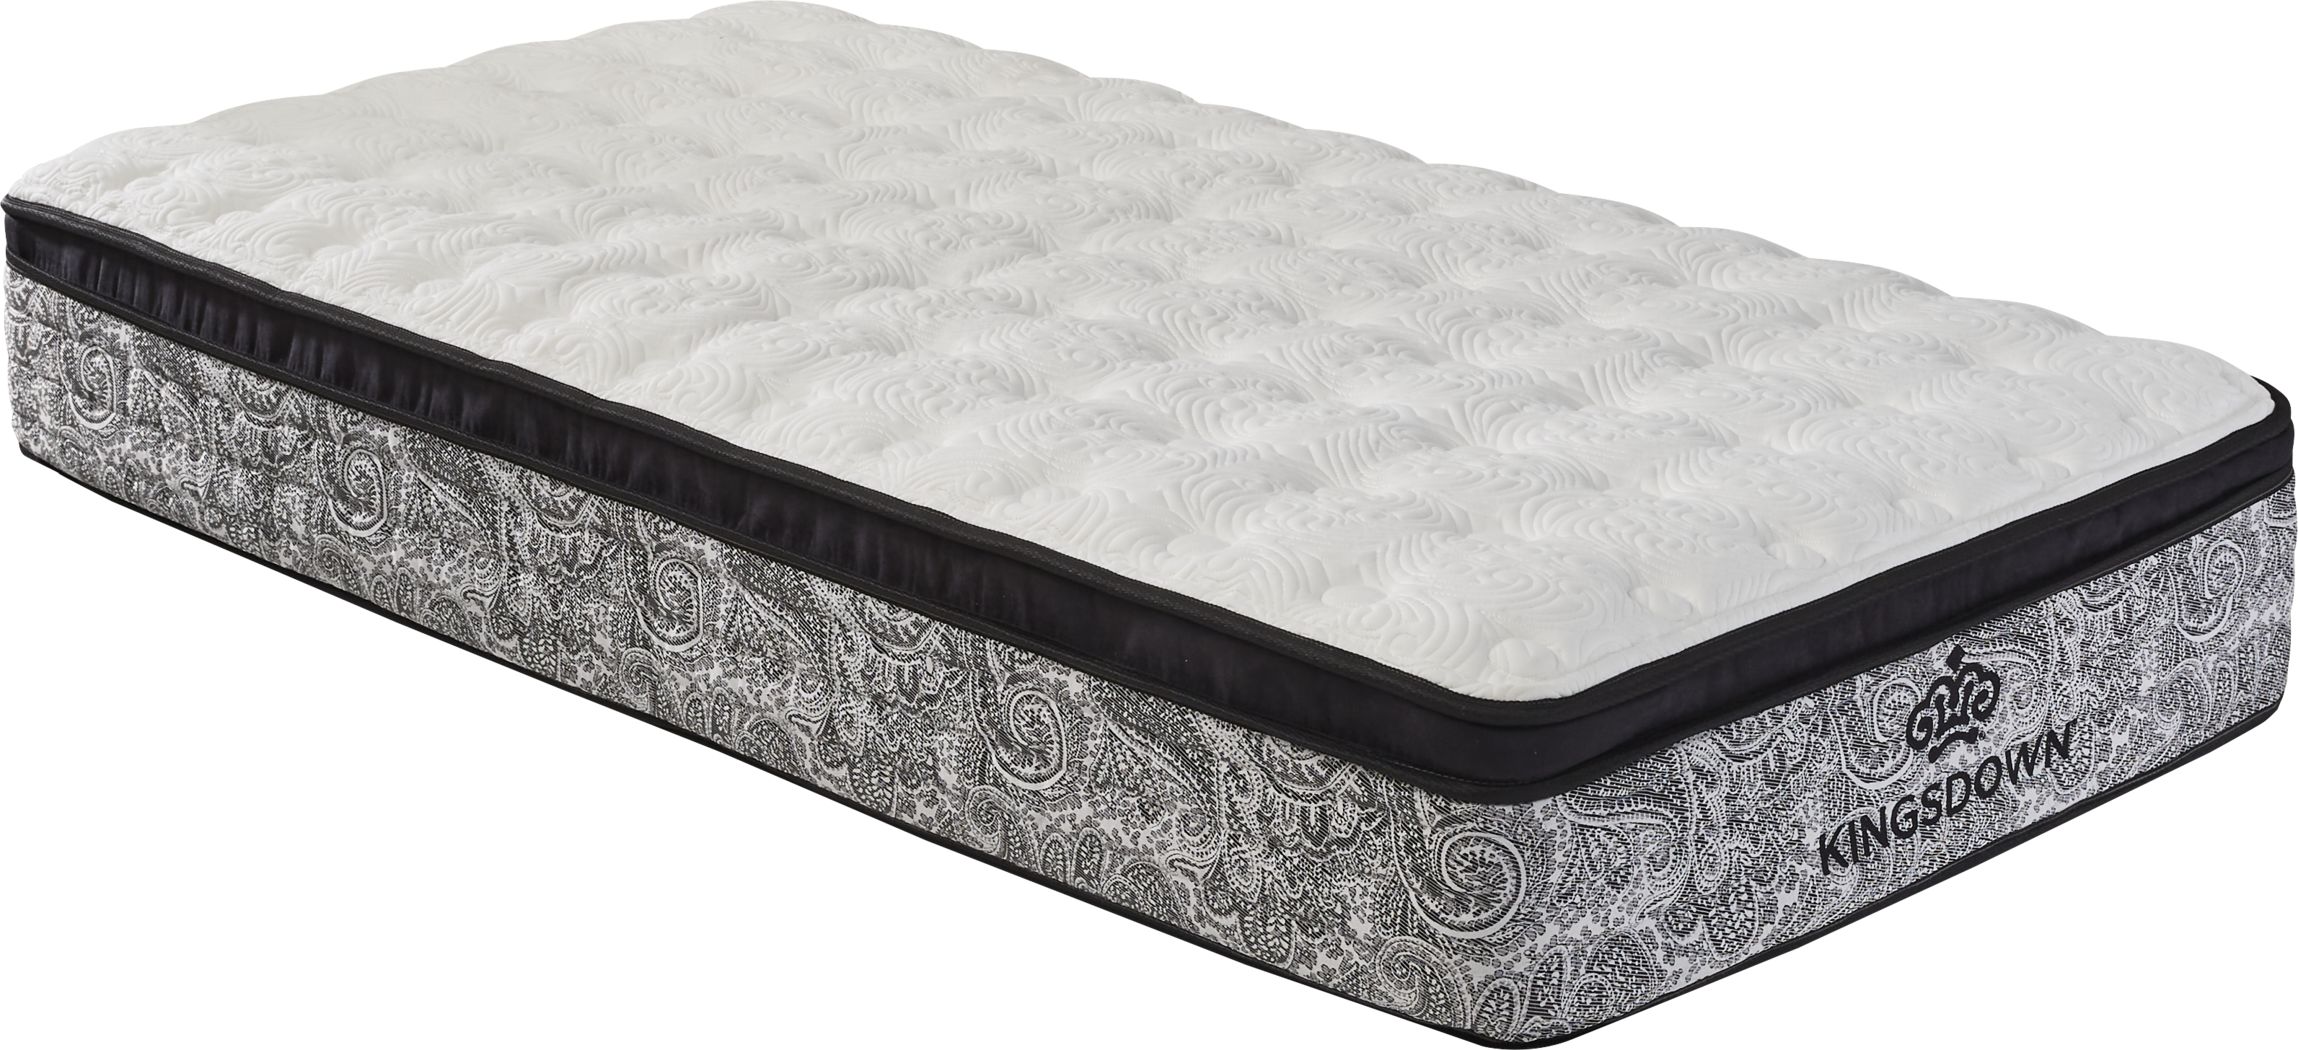 kingsdown gifted twin mattress